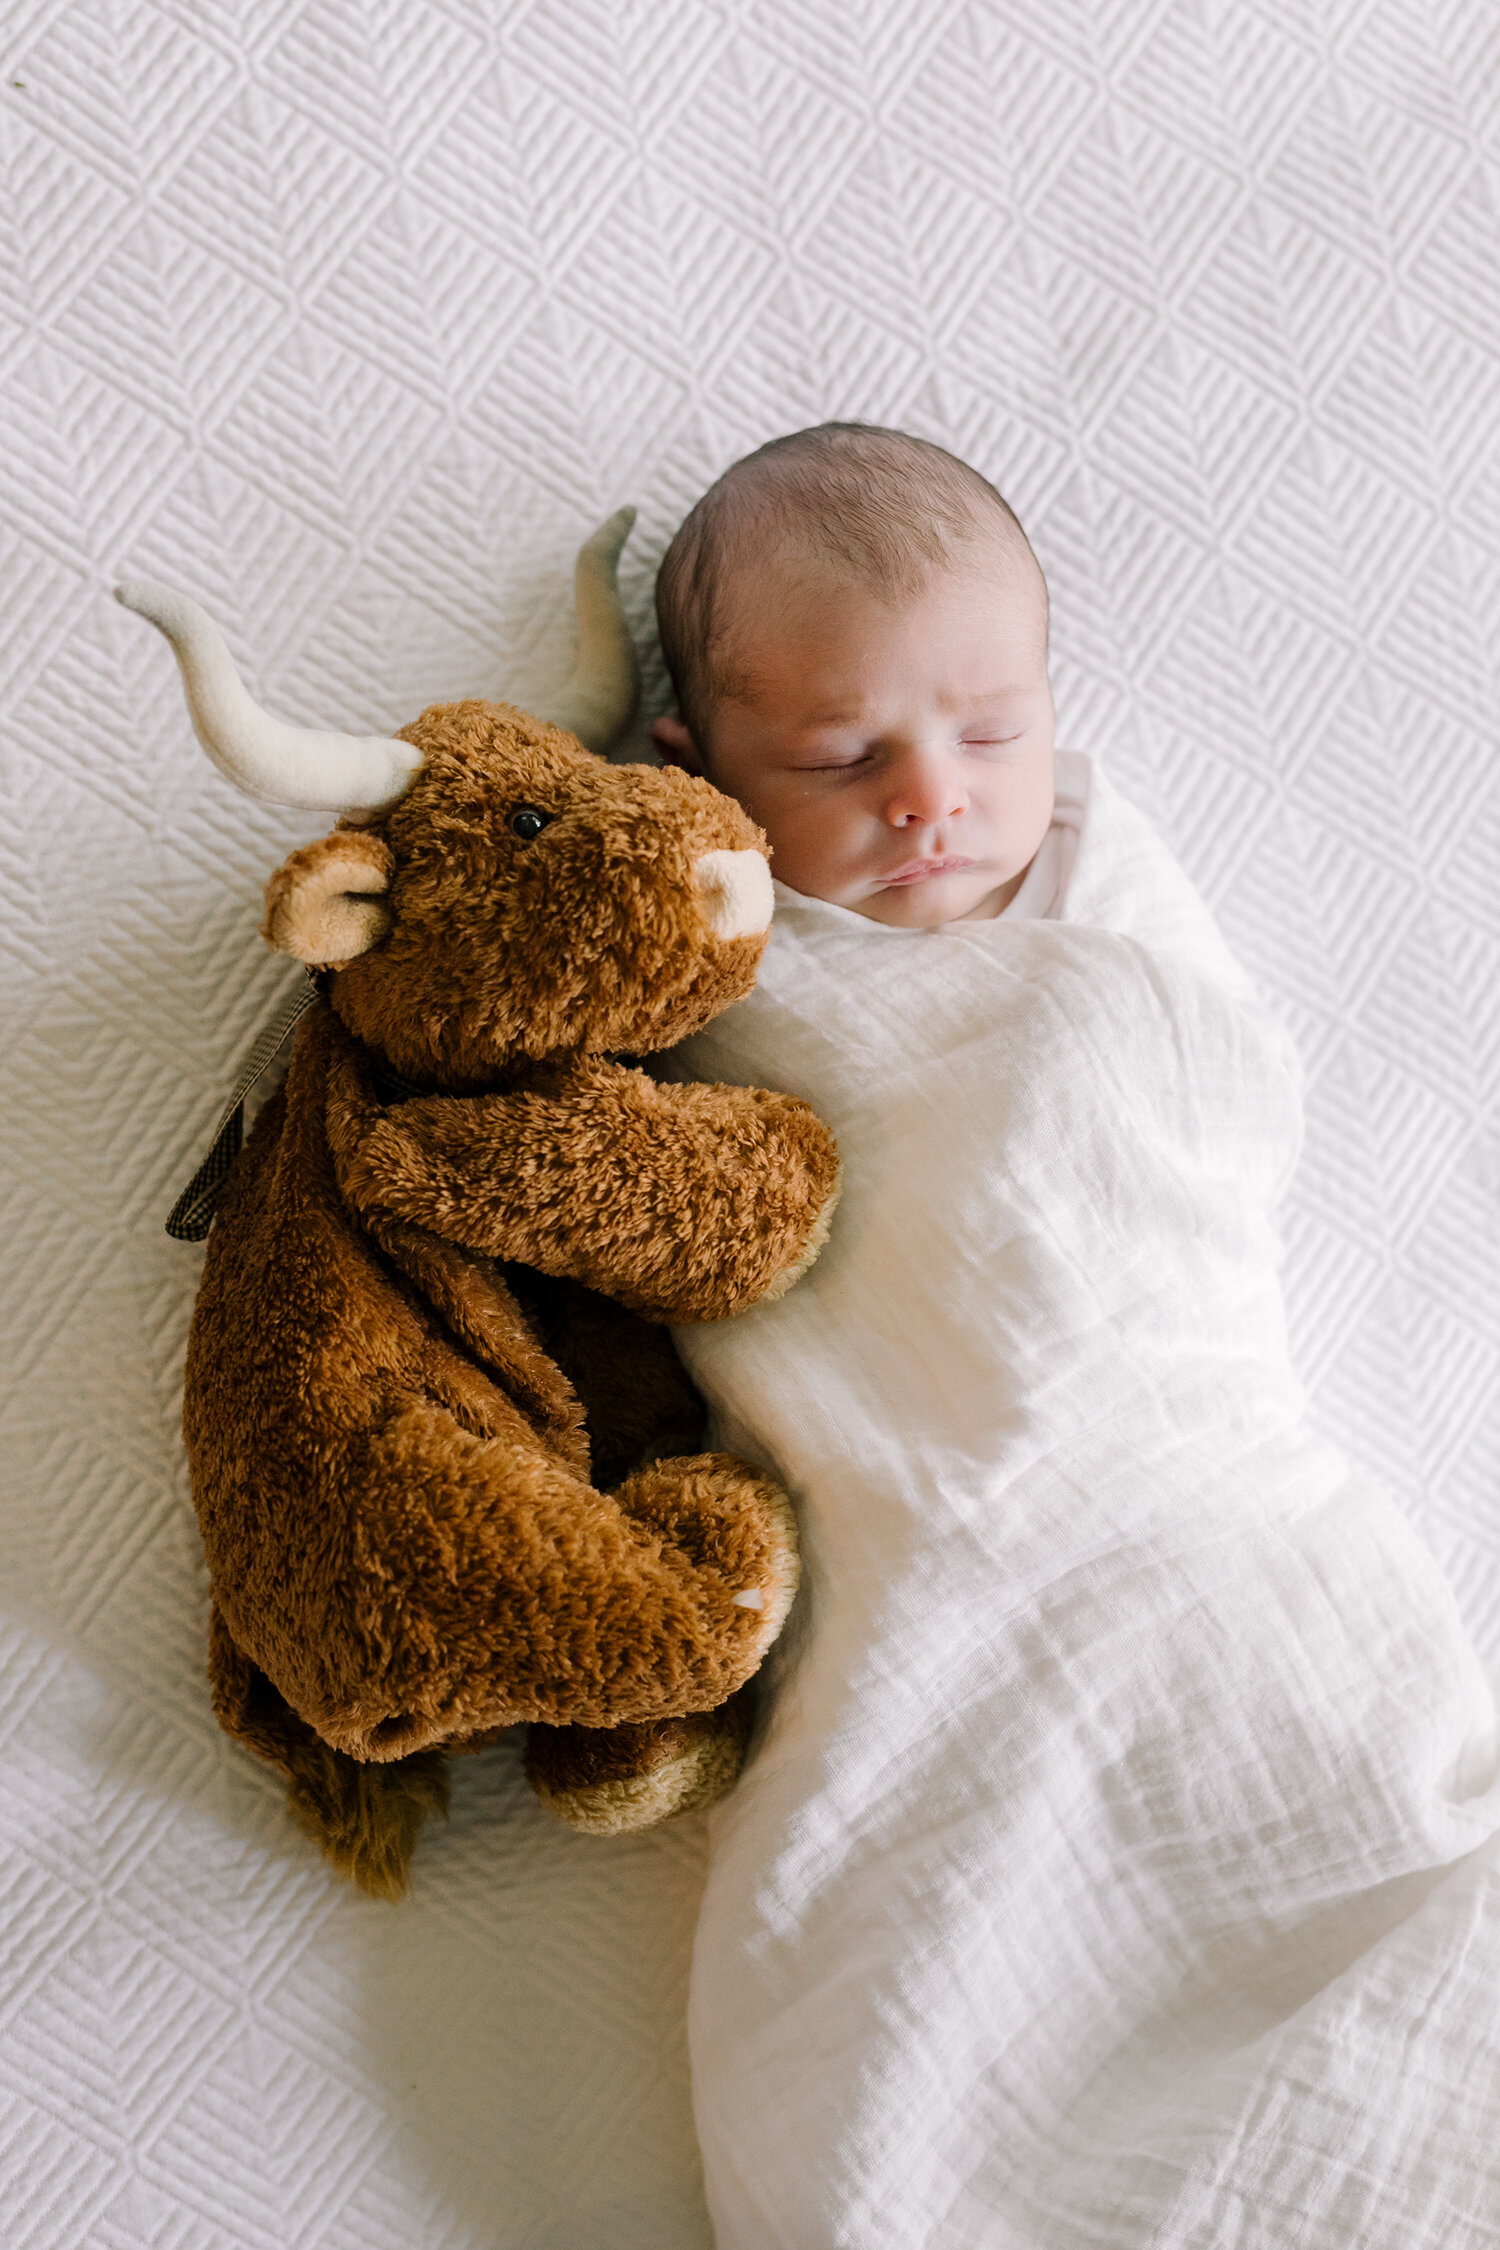 austin-texas-newborn-photographer-kimberly-brooke-51.jpg